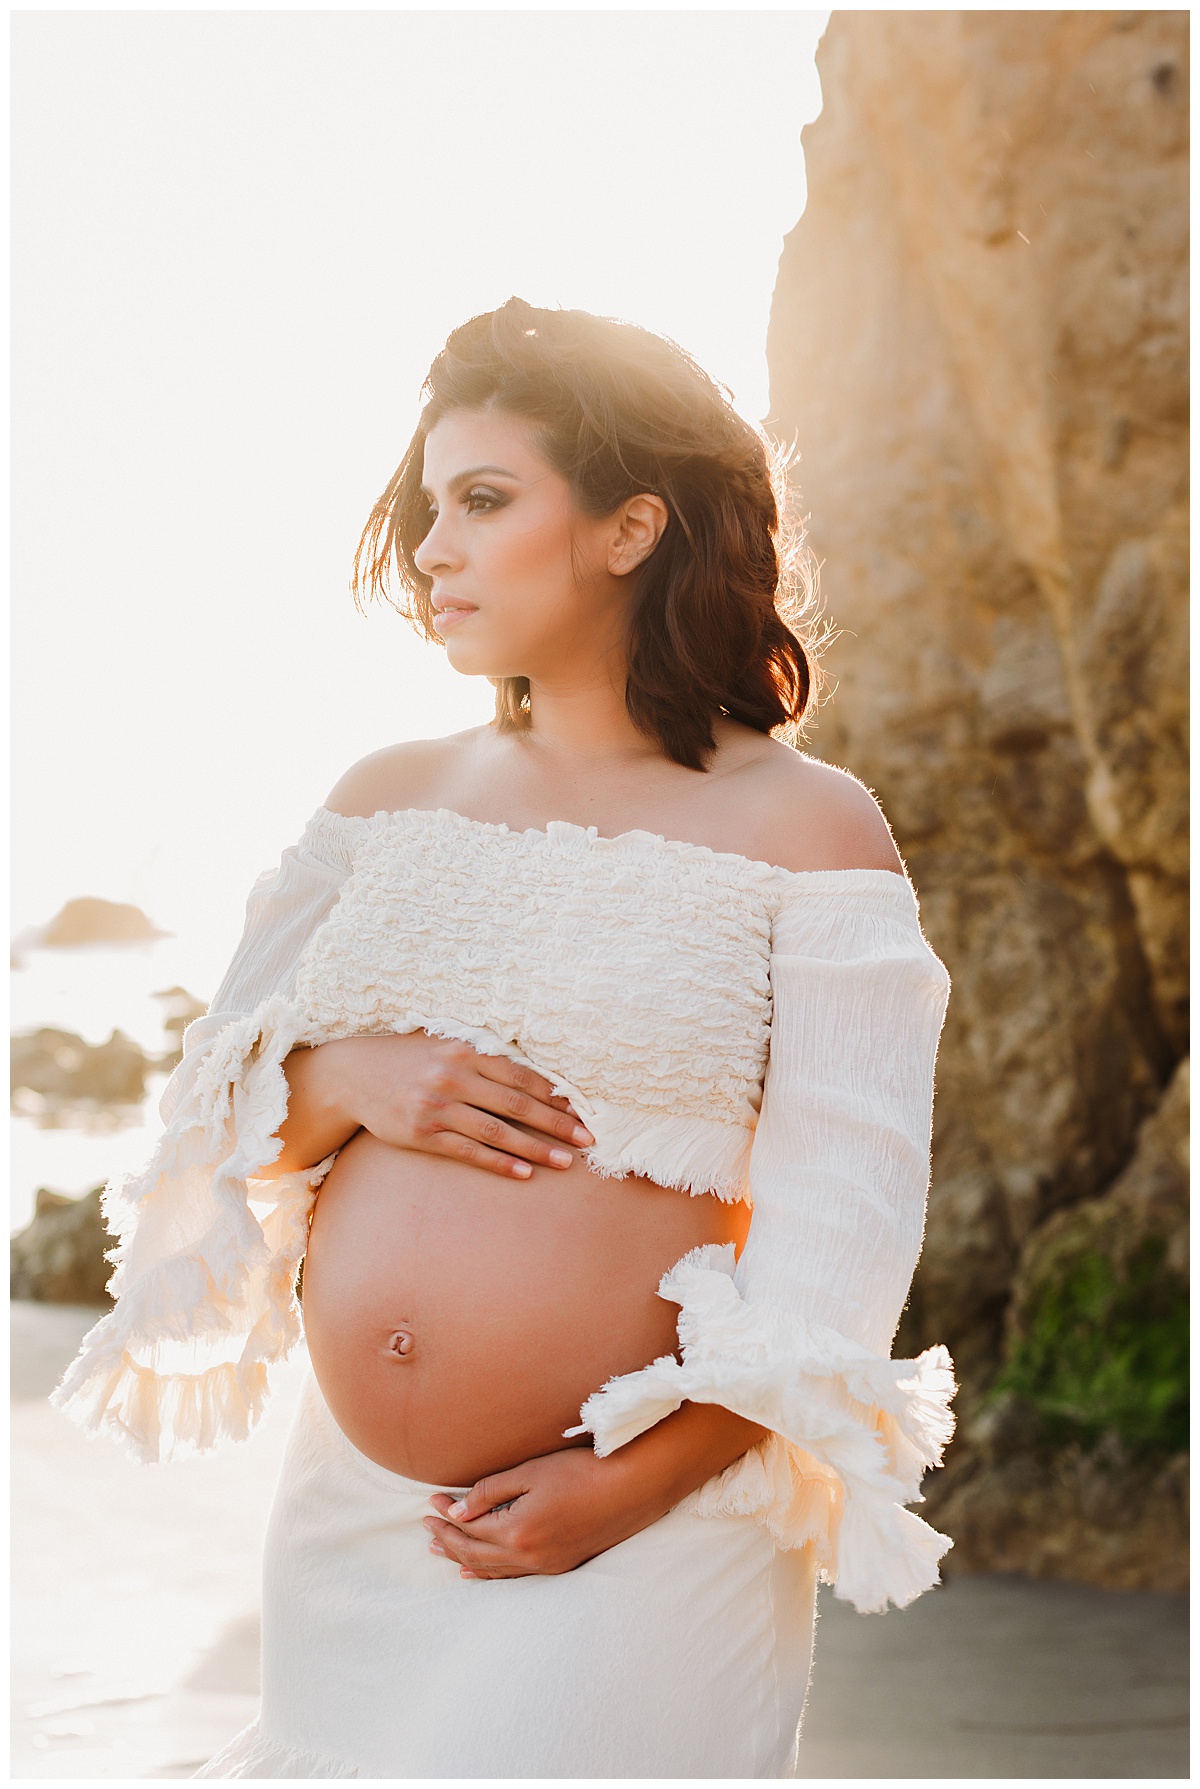 sunset beach maternity photos, Malibu maternity photographer